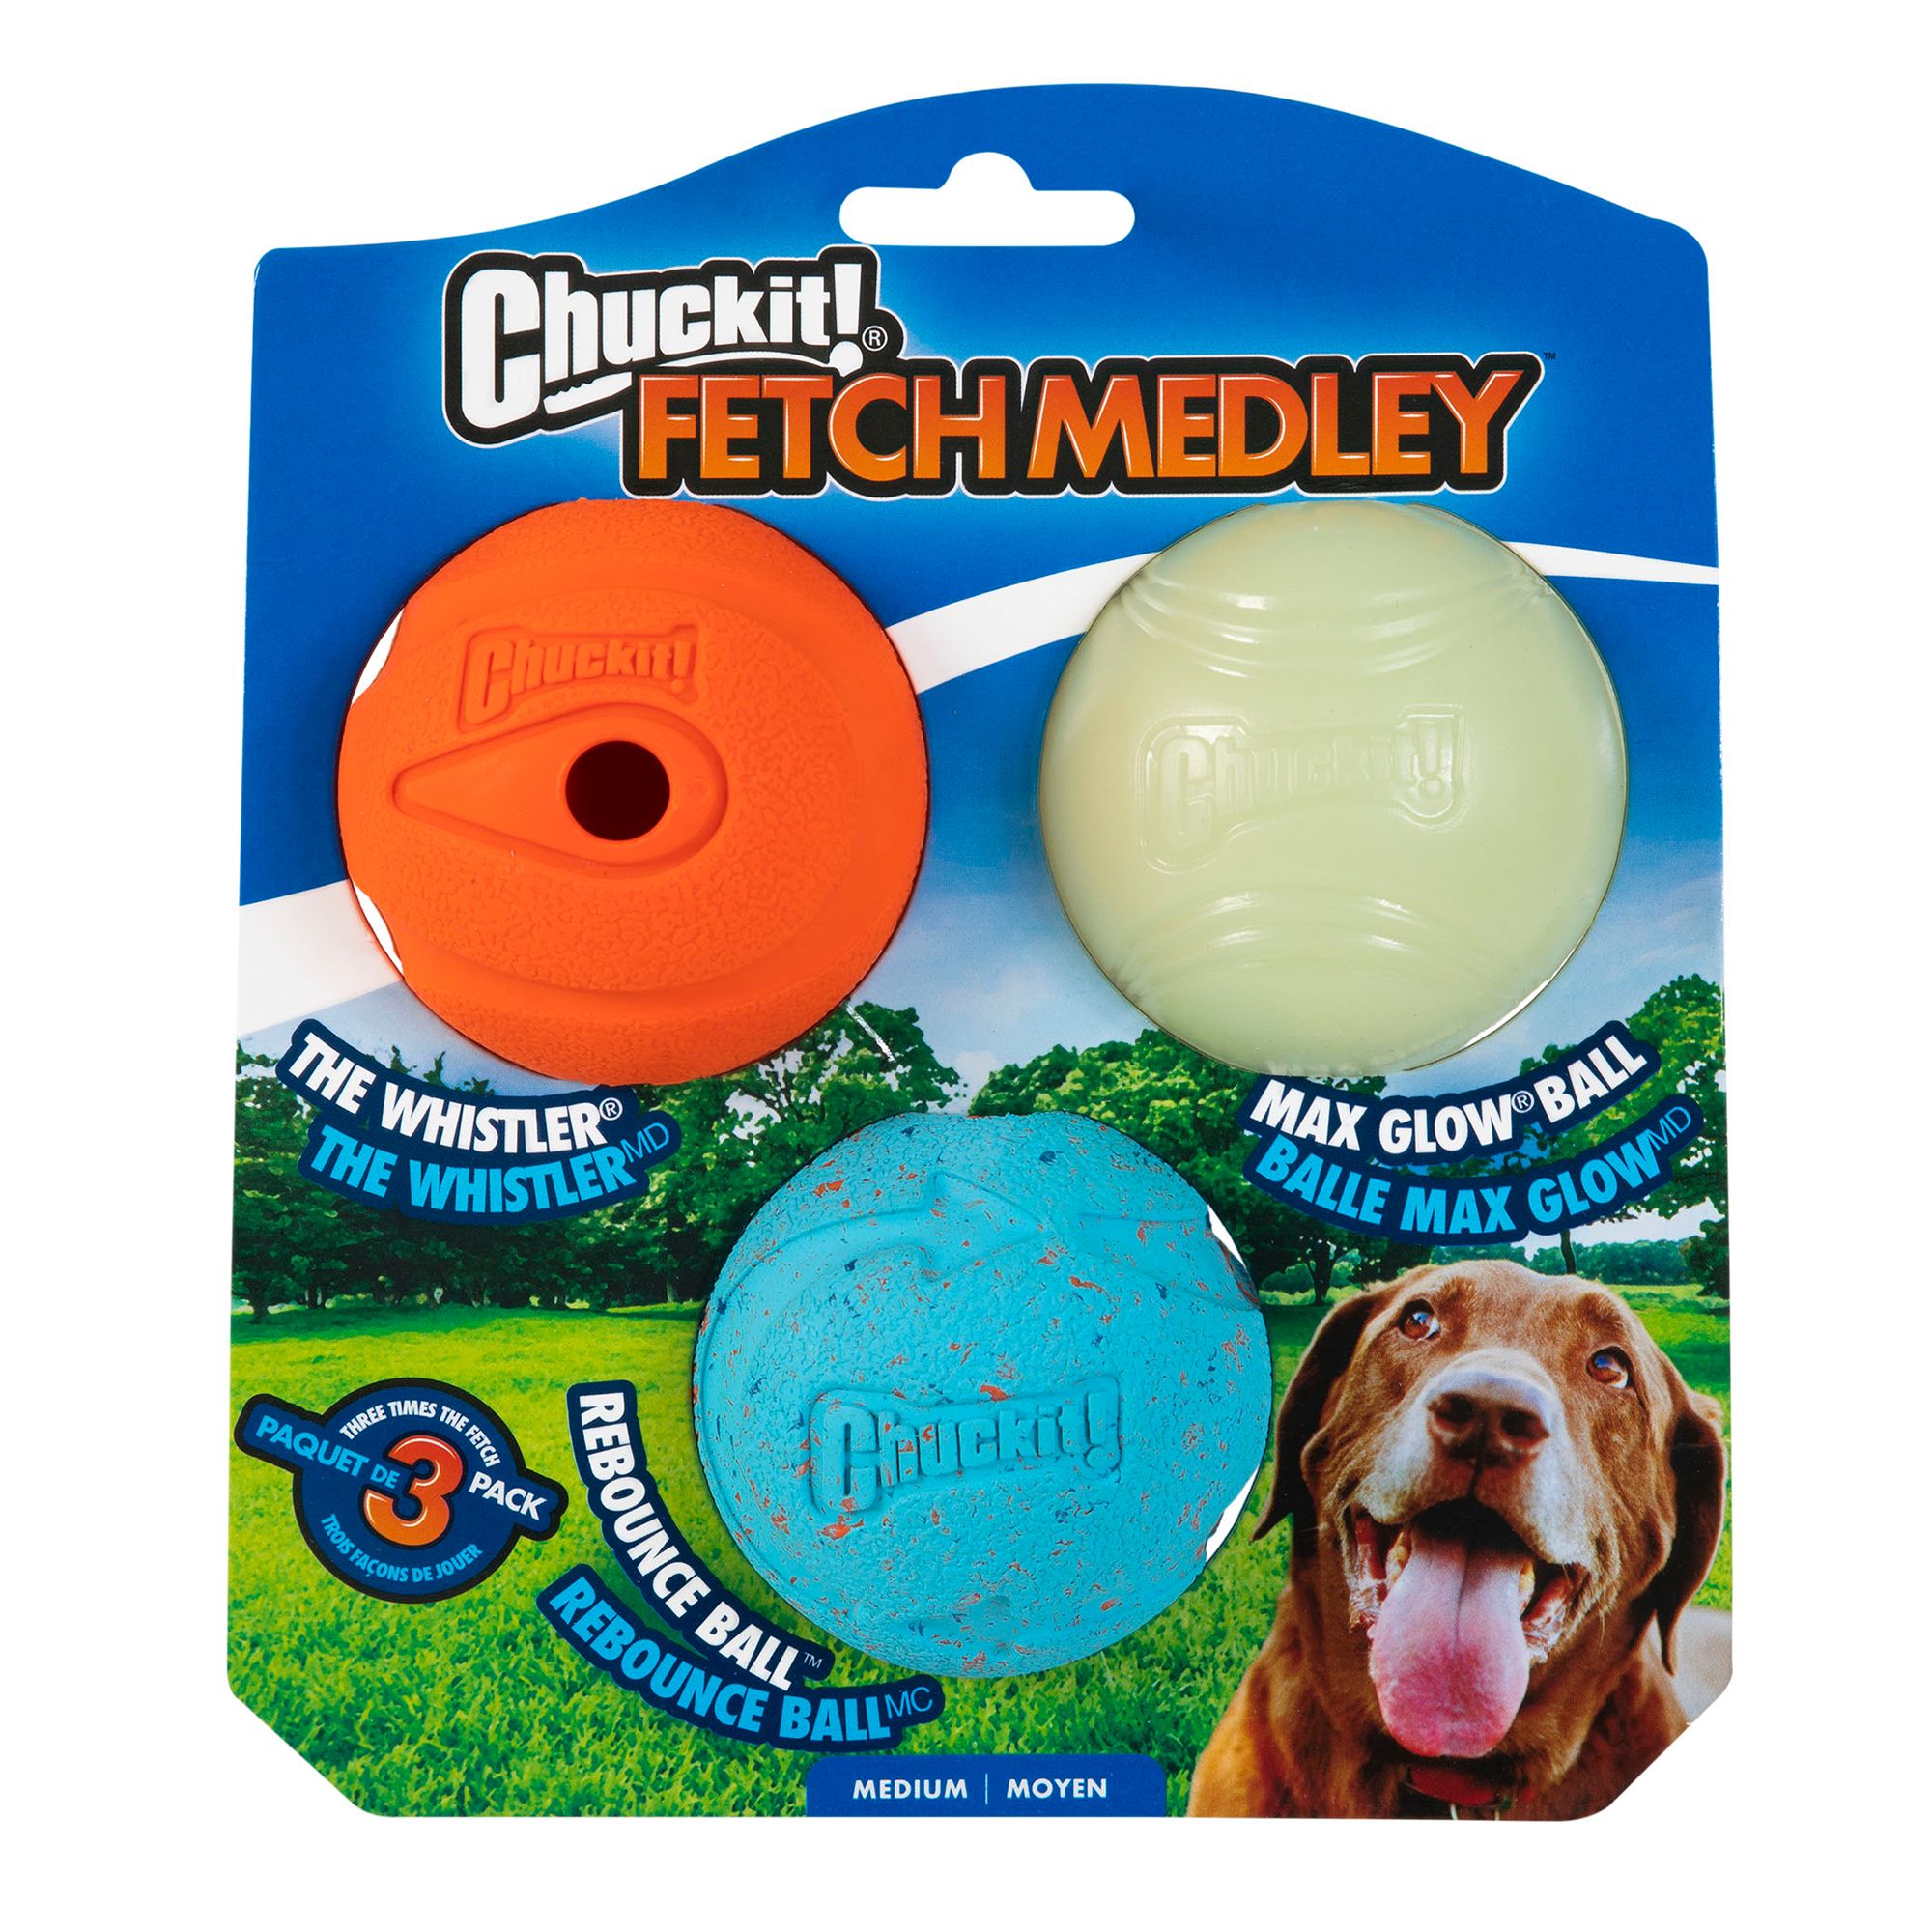 dog toy that shoots balls